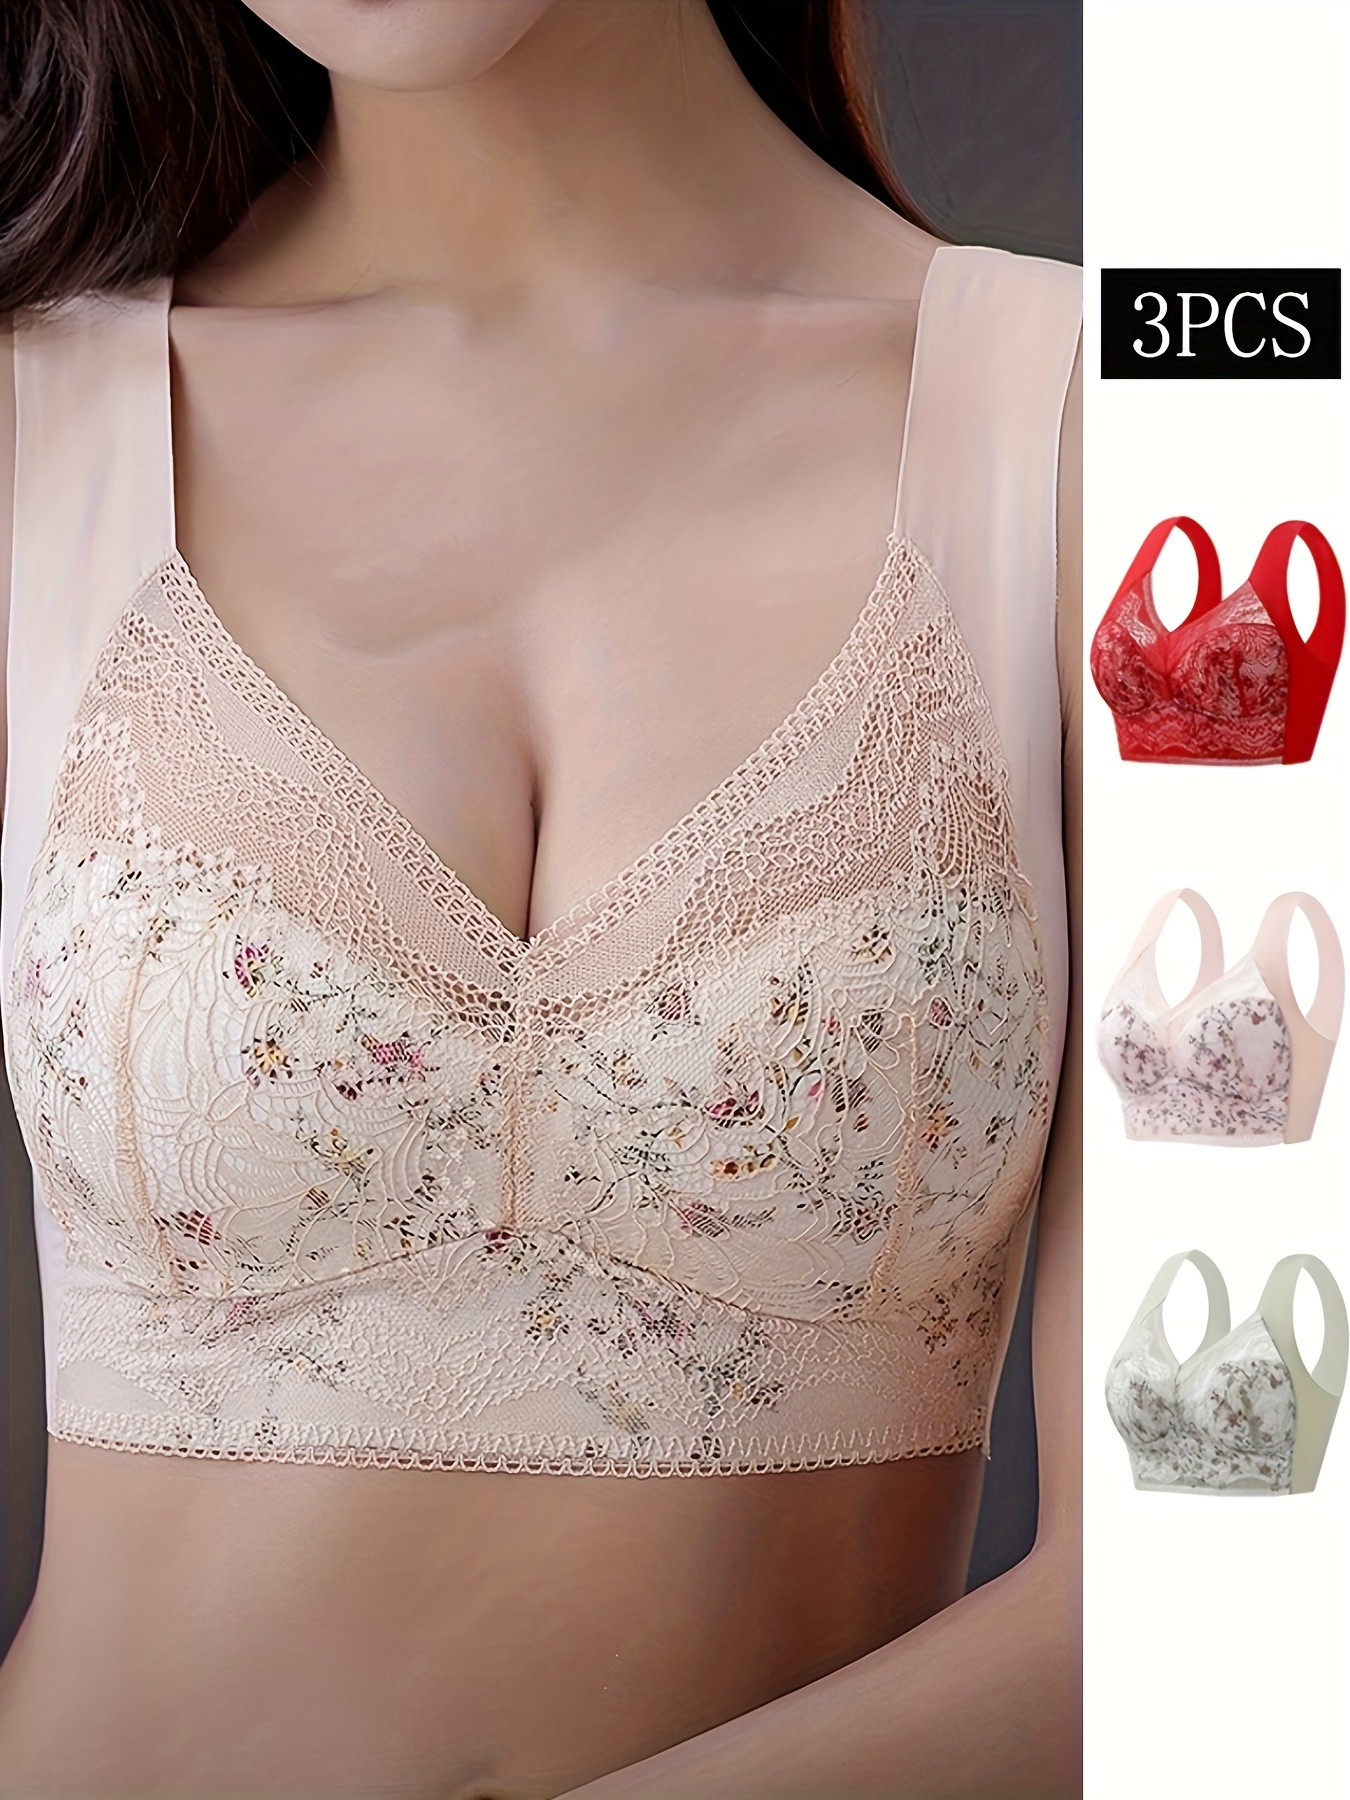 3pcs Heart Print Wireless Bras, Comfy & Breathable Push Up Bra, Women's  Lingerie & Underwear